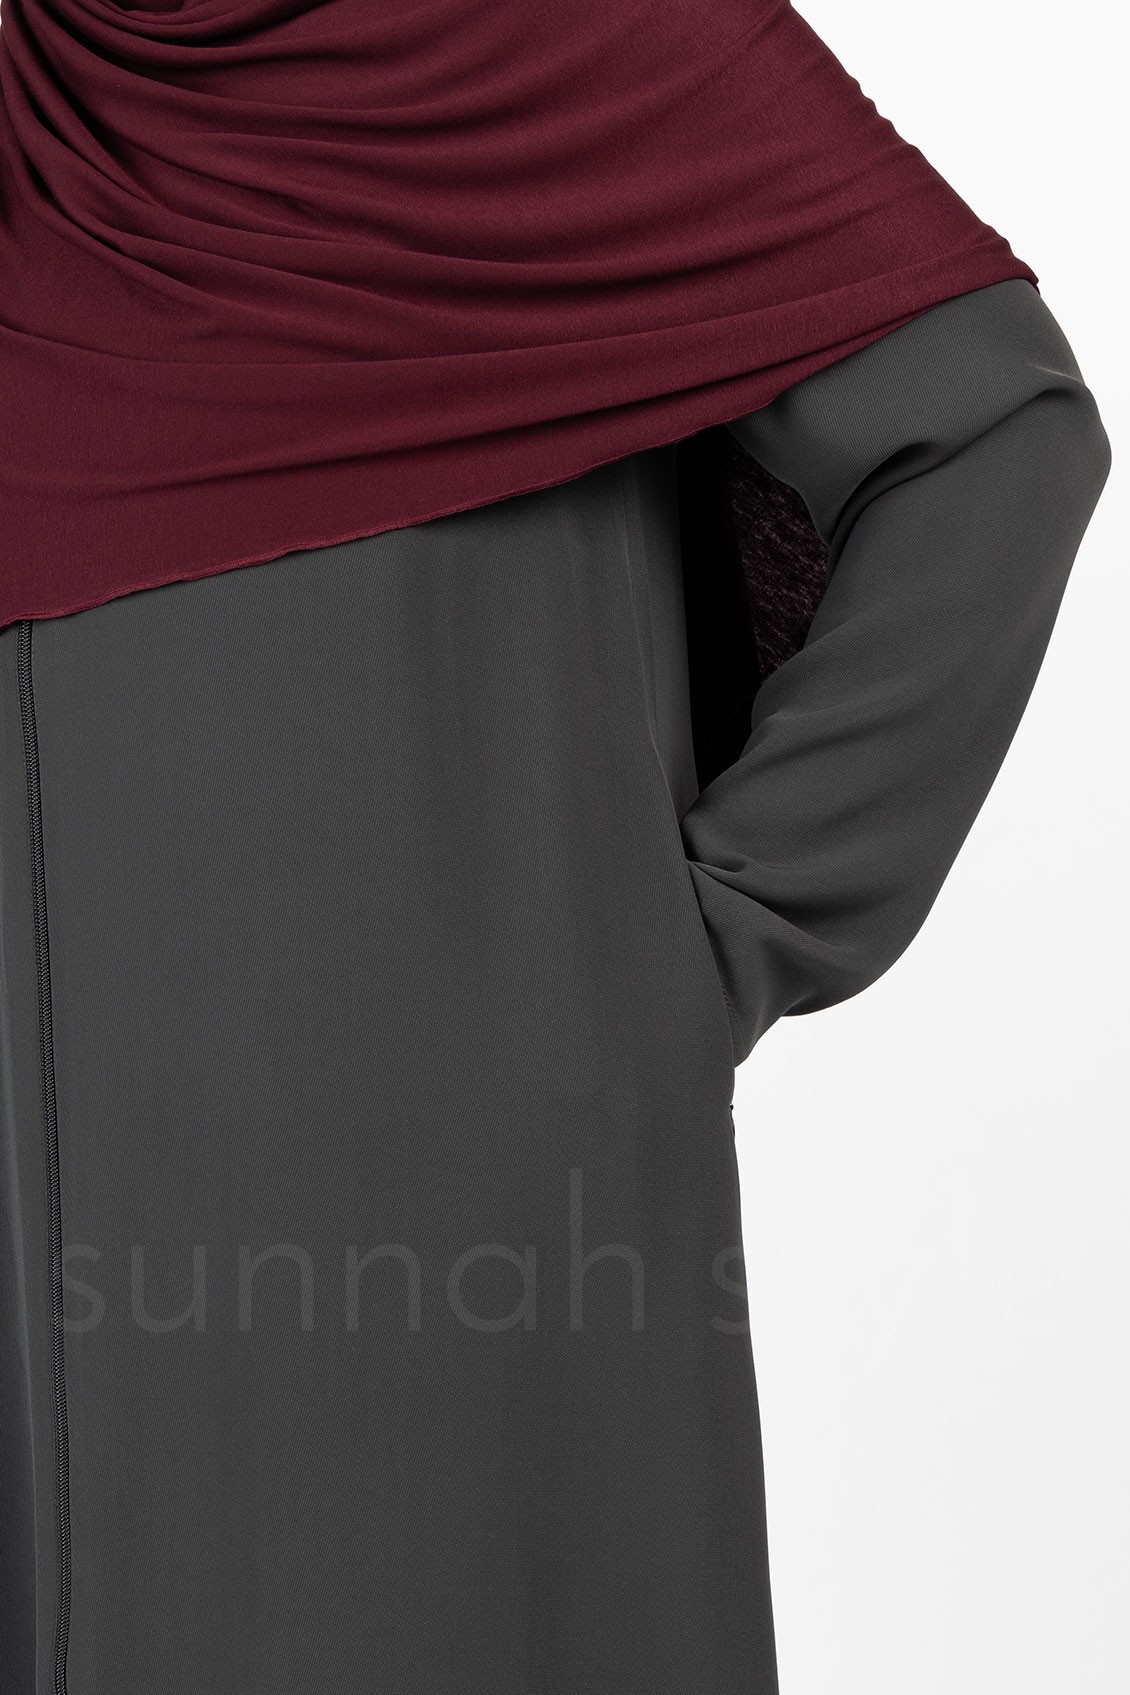 Sunnah Style Essentials Full Zip Abaya Slim Dark Grey